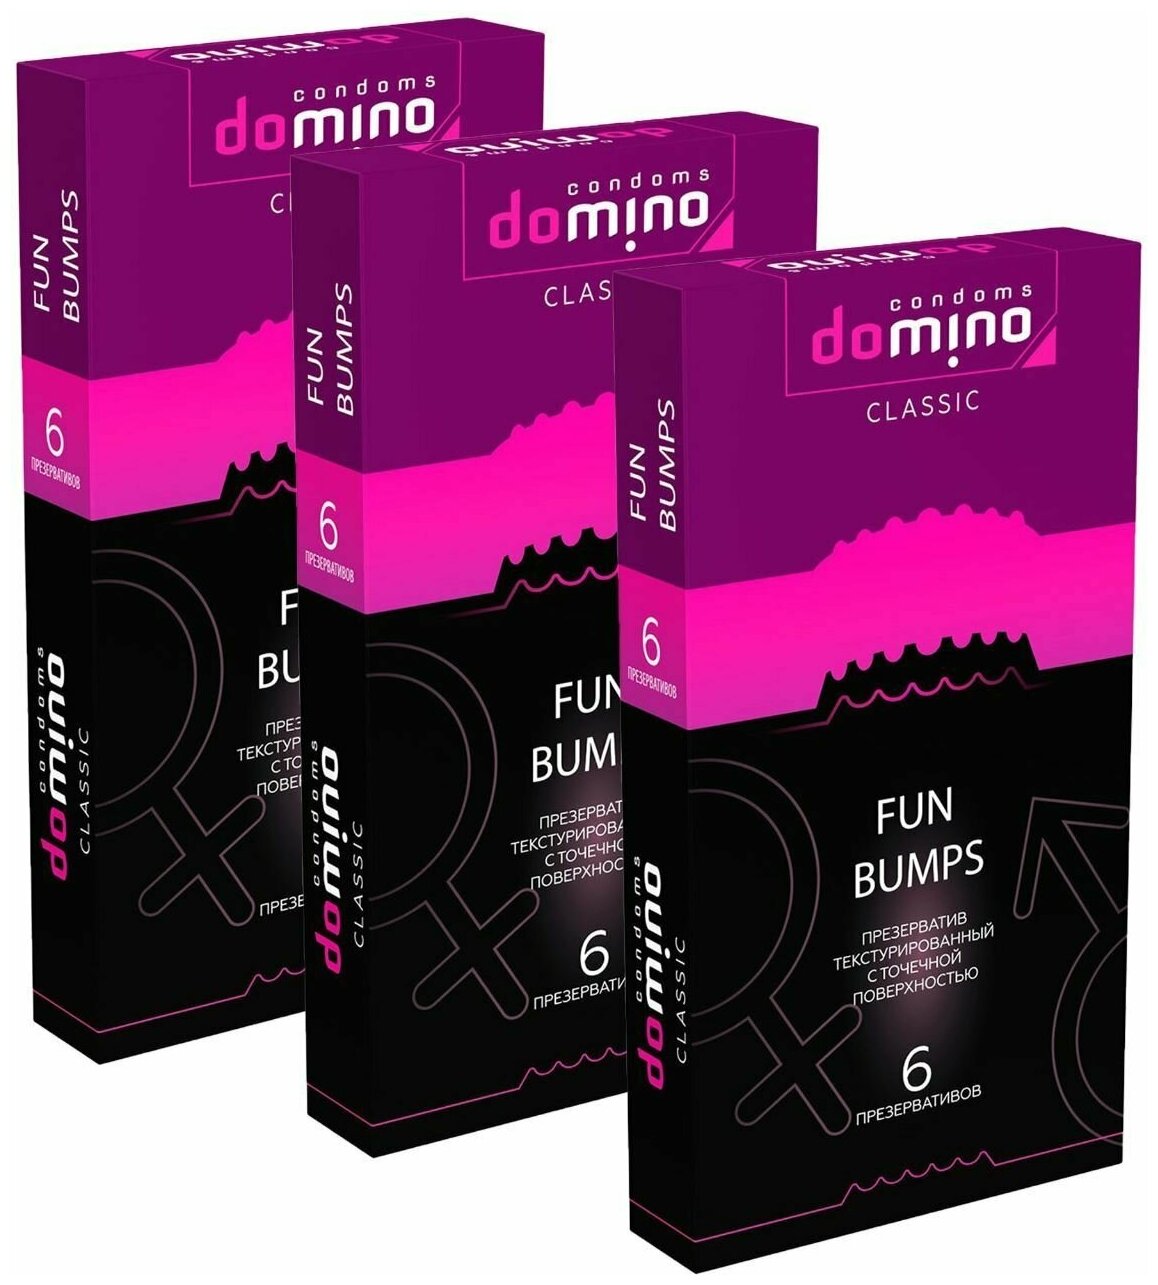 Презервативы DOMINO CLASSIC FUN BUMPS, 3 пачки - 18 шт.